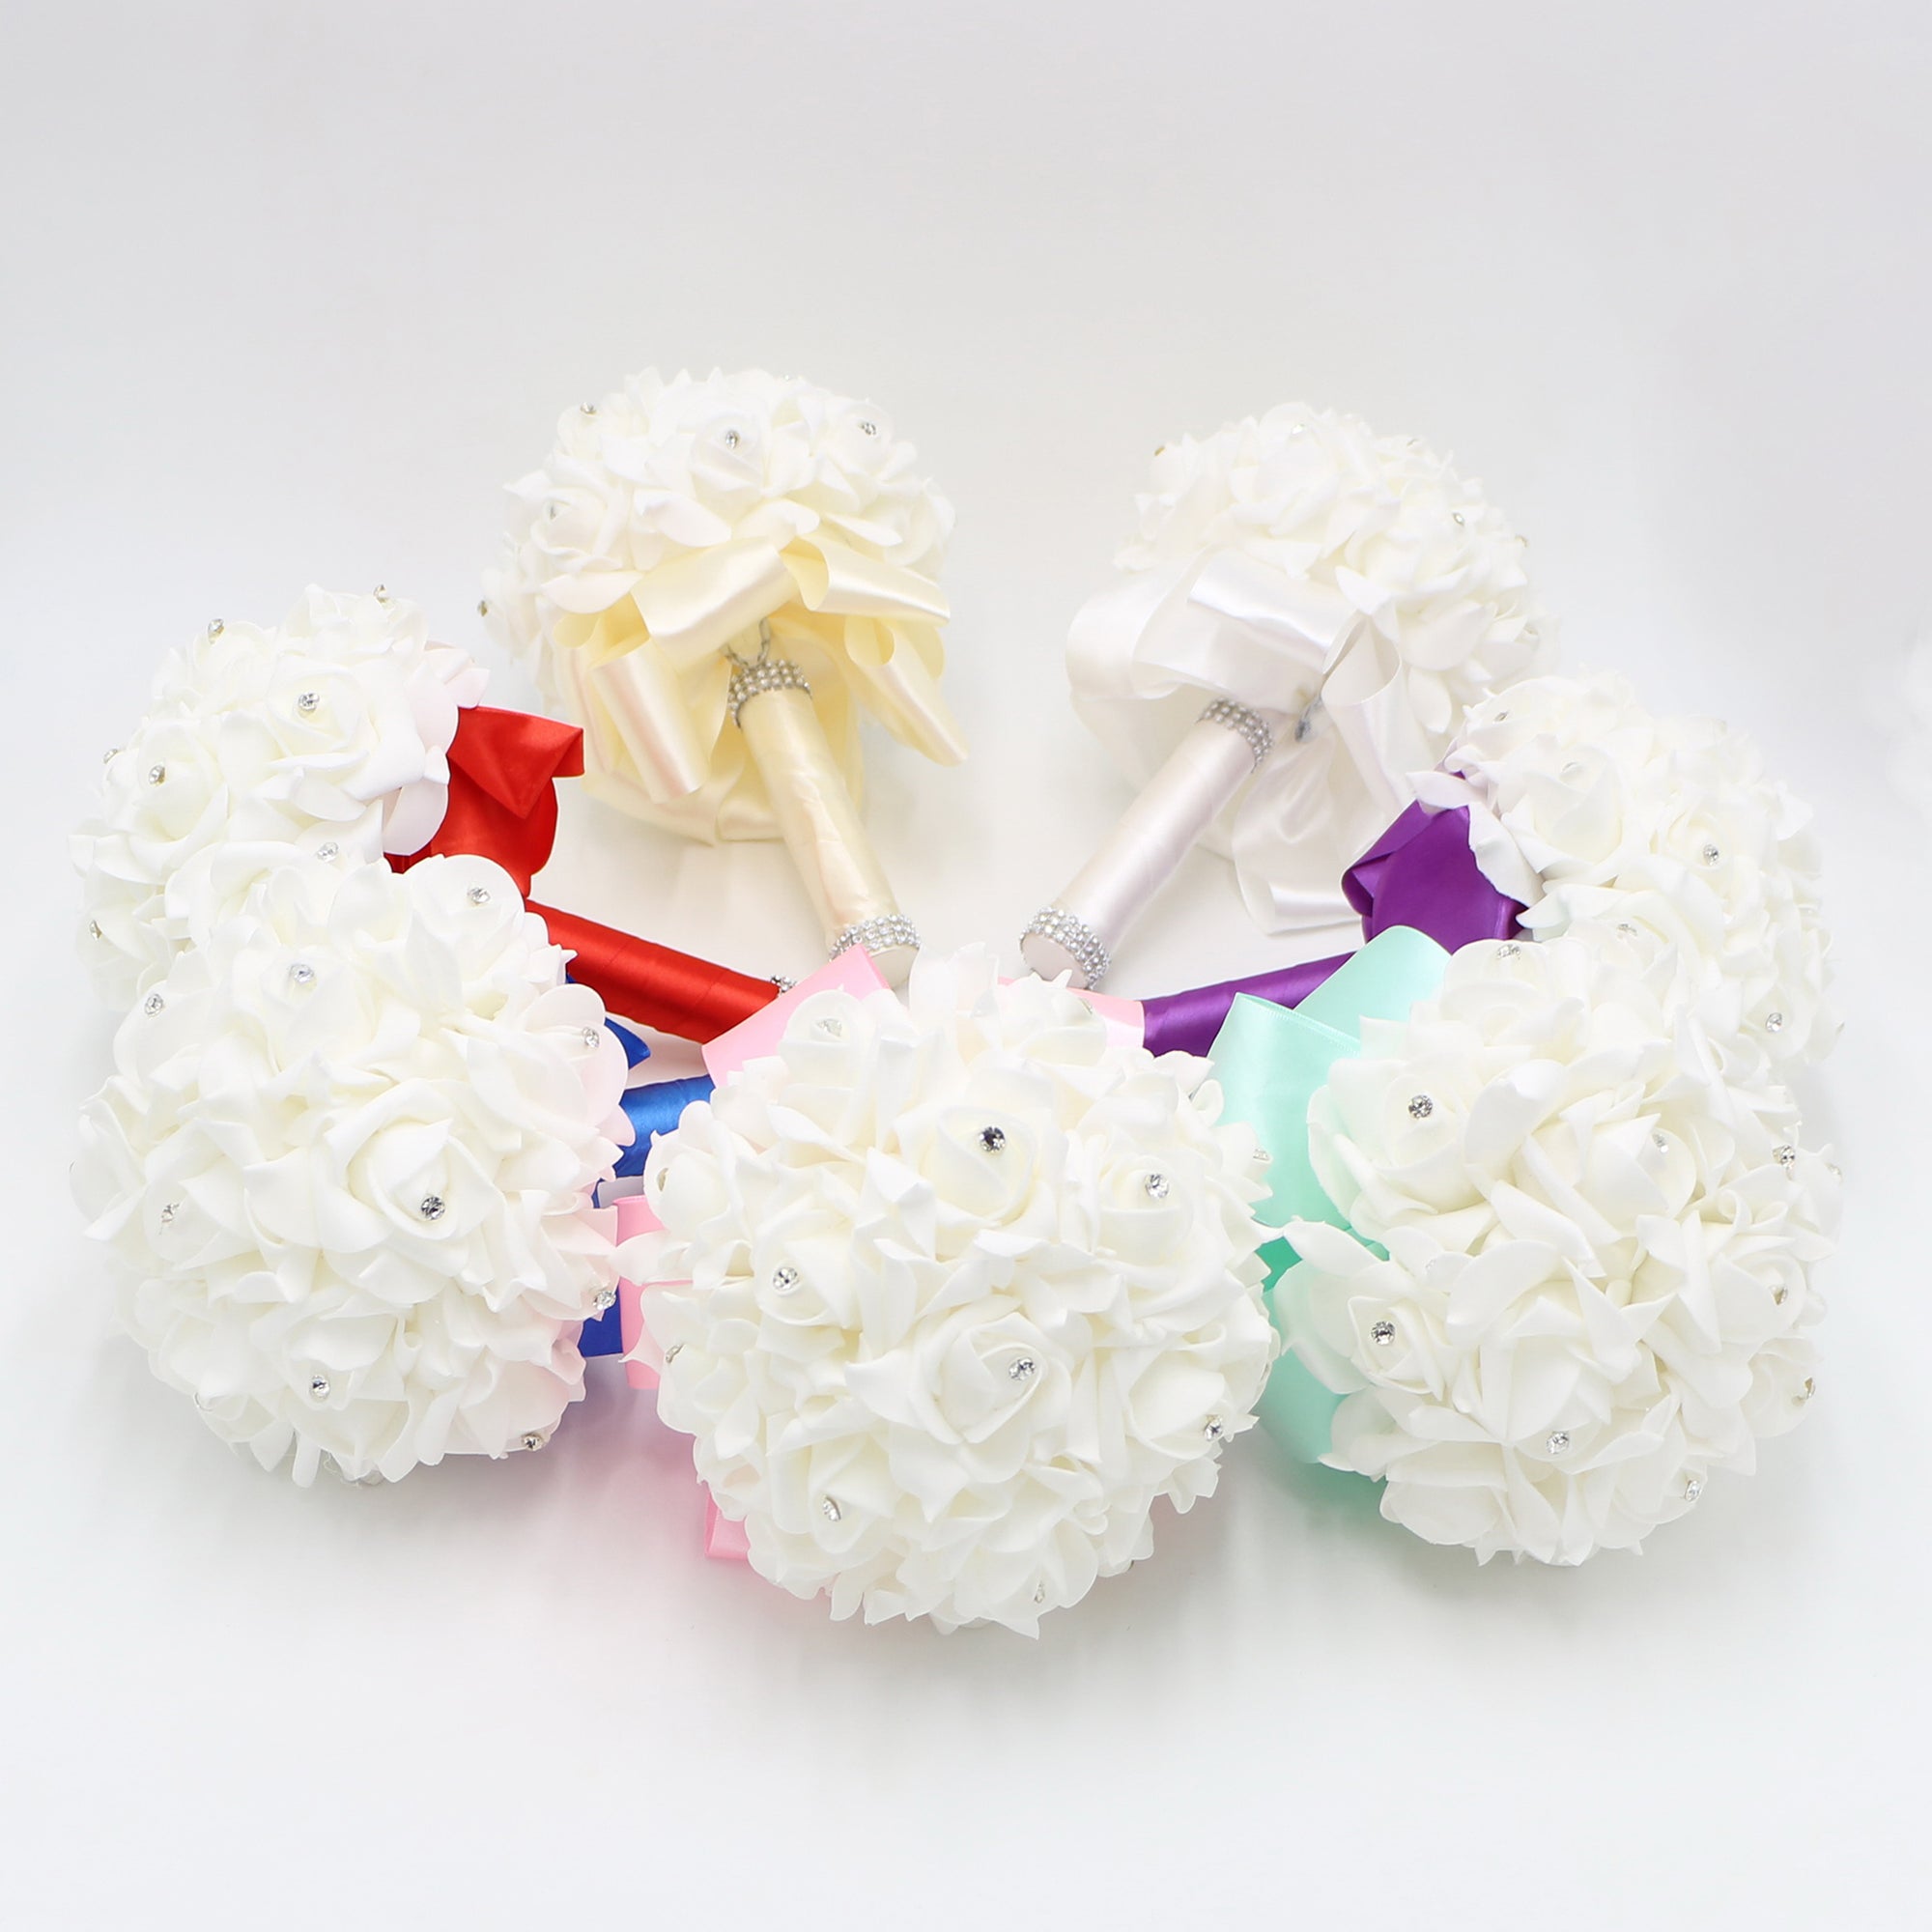 Small Bouquet for Bridesmaids Flower Girl Artificial White Flower Bouquet